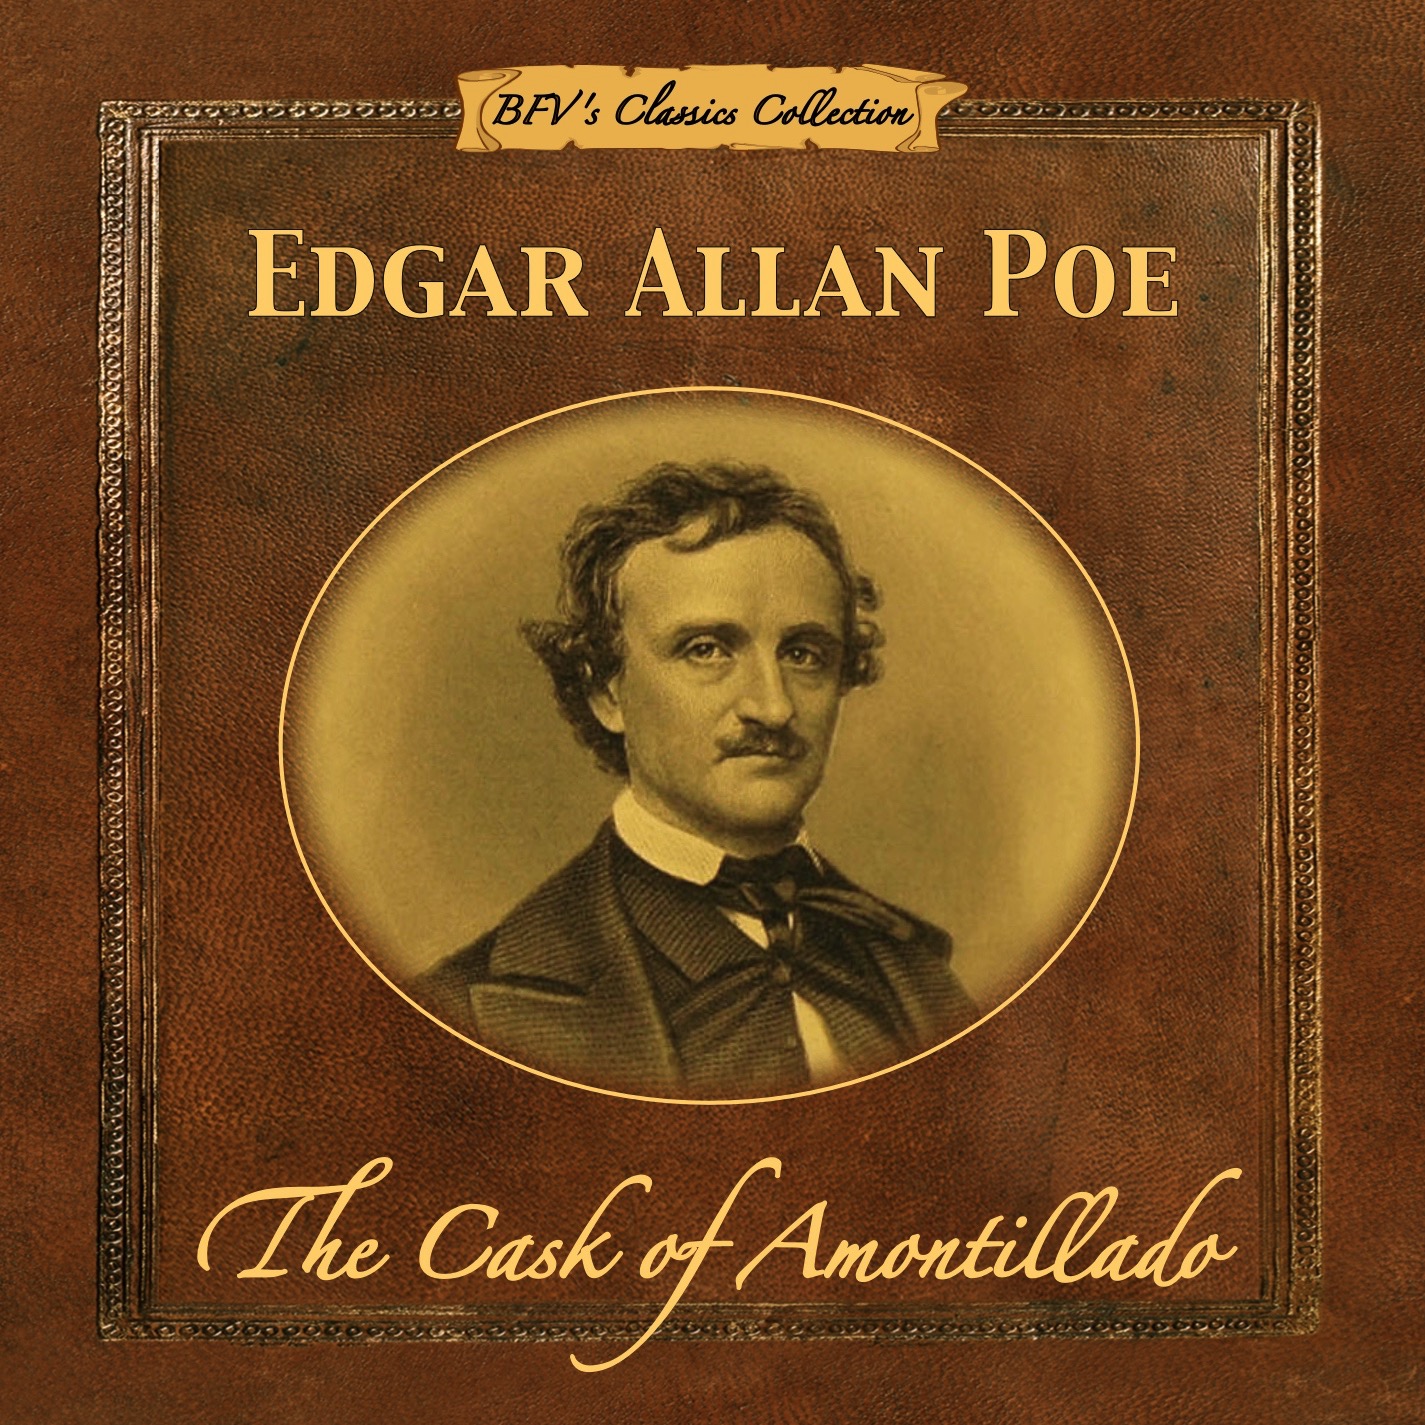 edgar allan poe biography the cask of amontillado